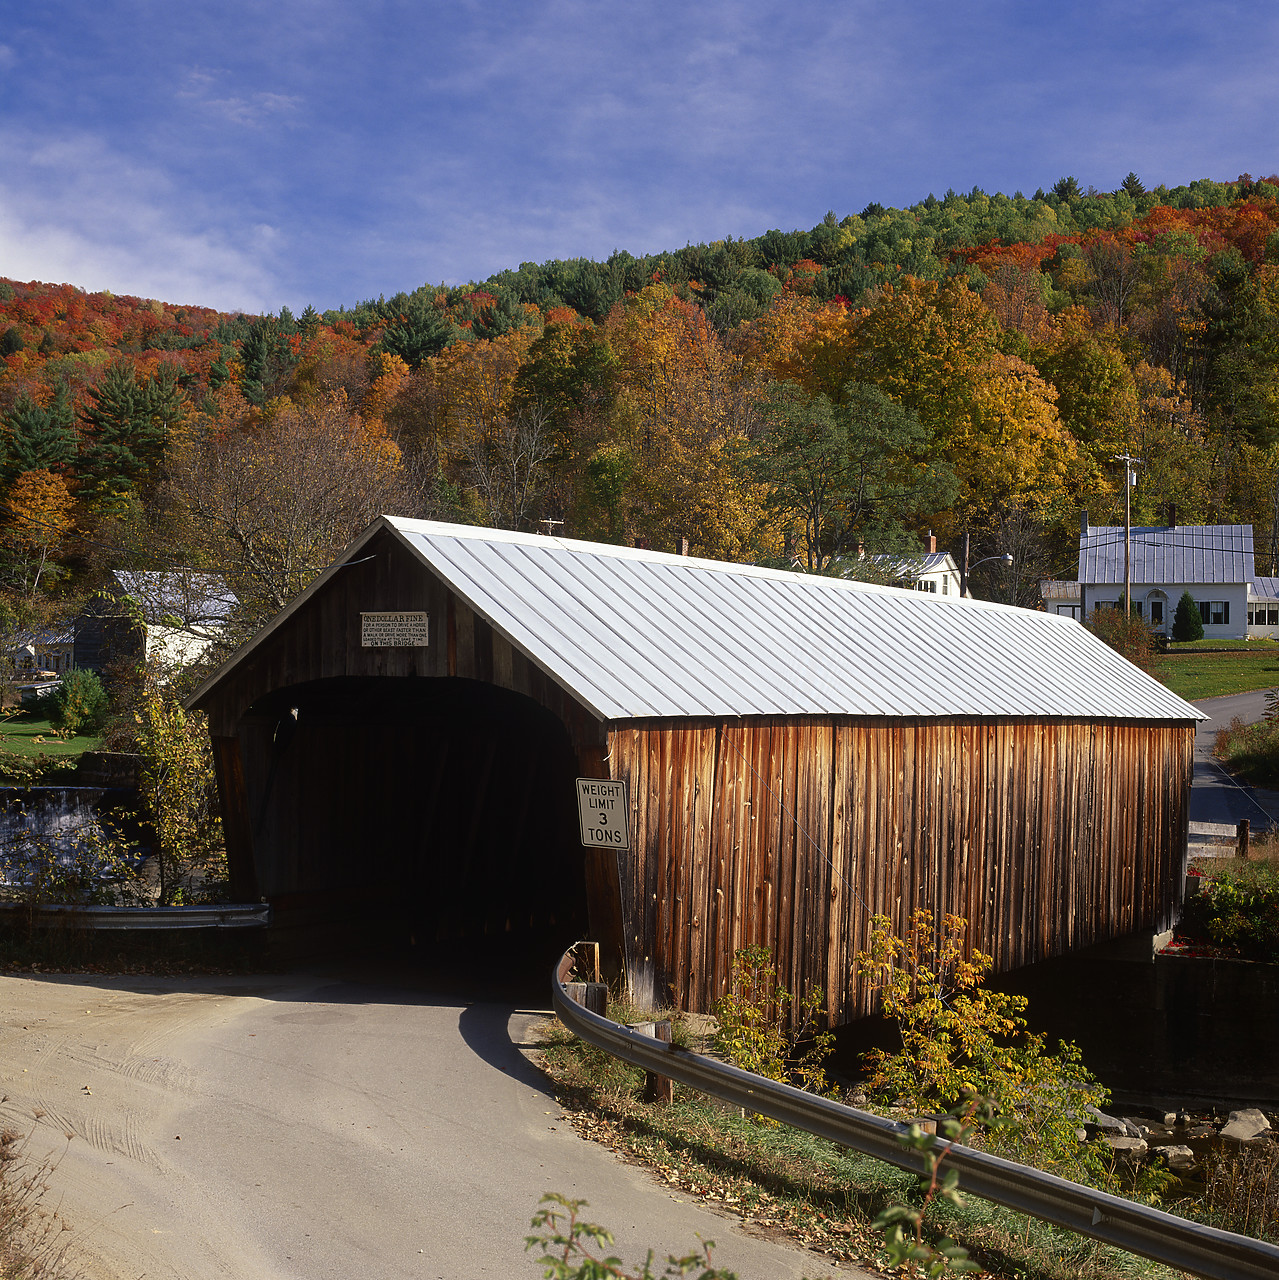 #955796-1 - Covered Bridge, Tunbridge, Vermont, USA